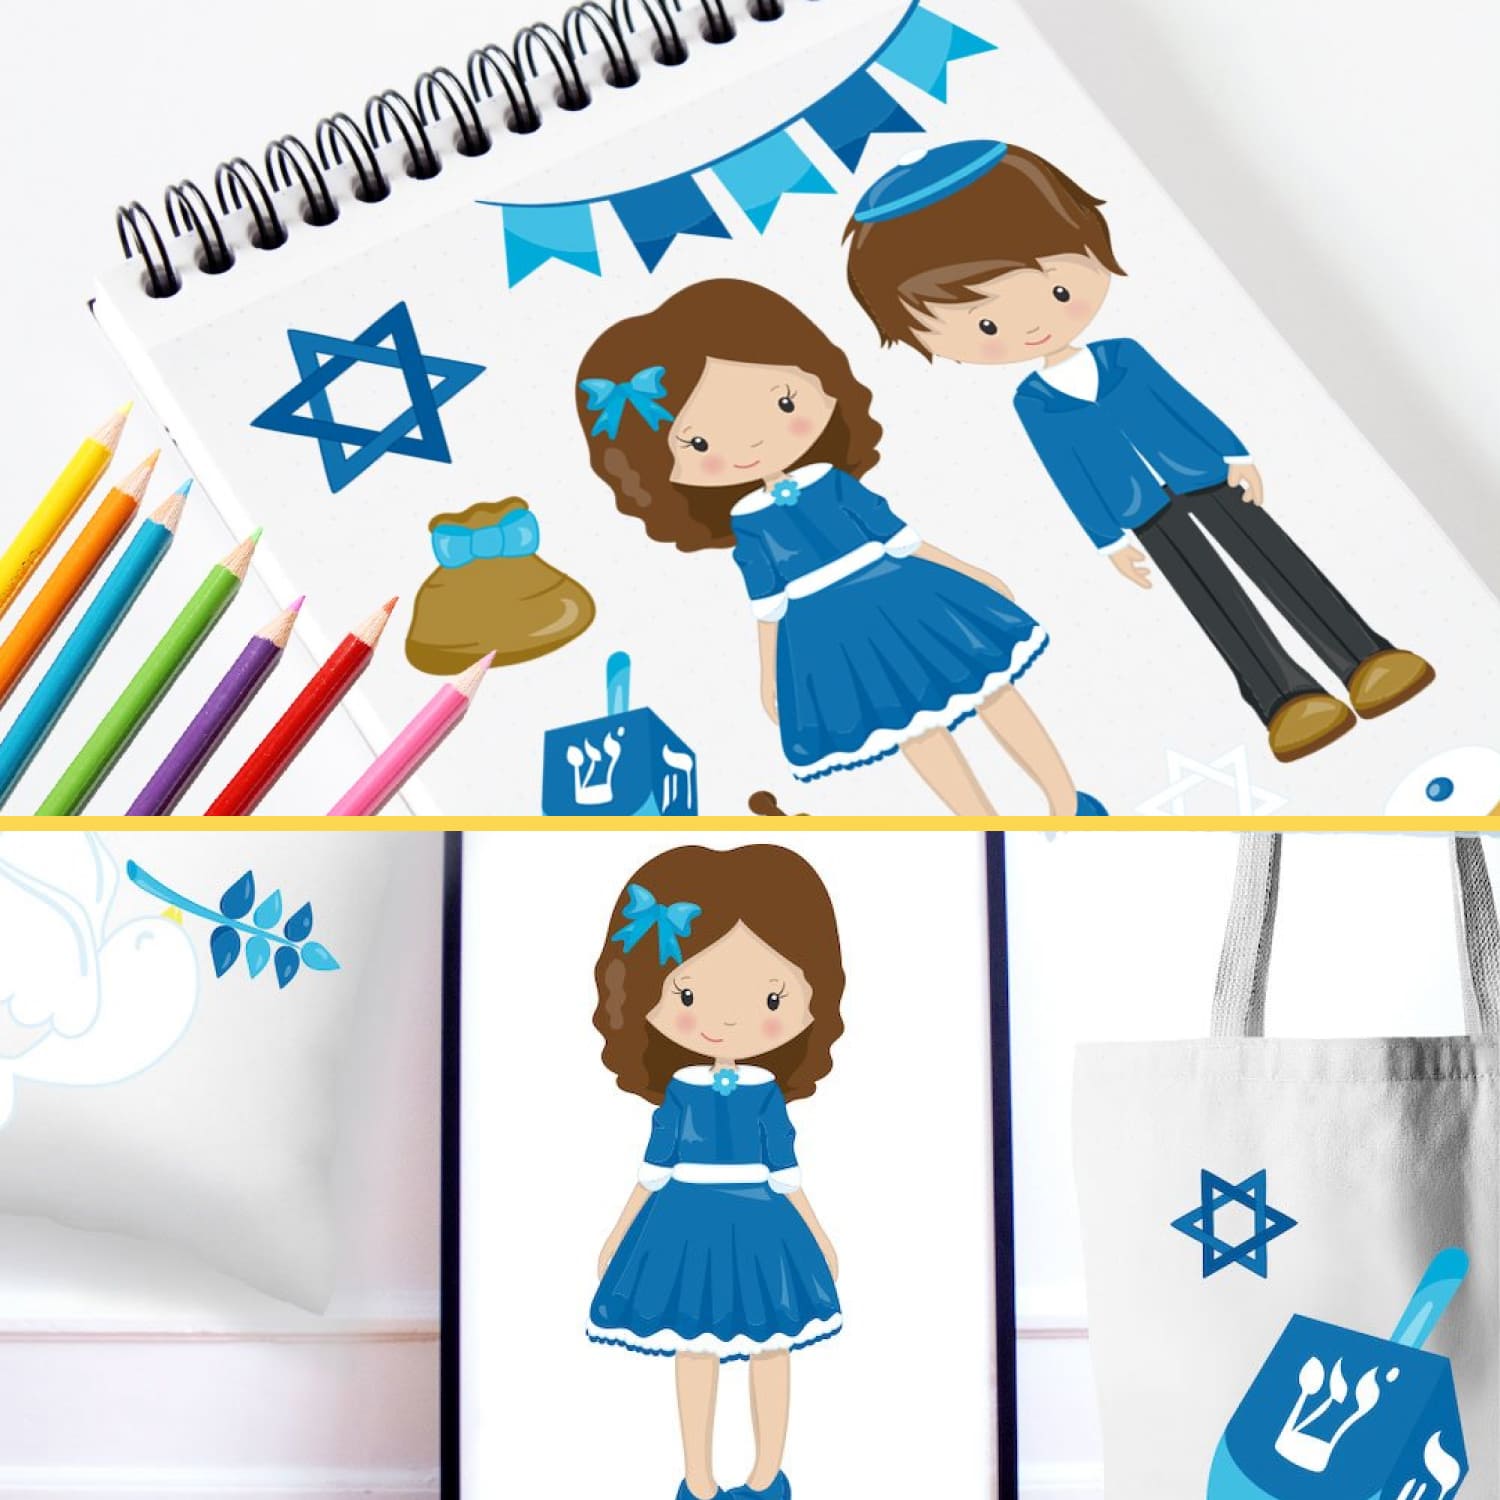 Preview hanukkah graphic illustration.